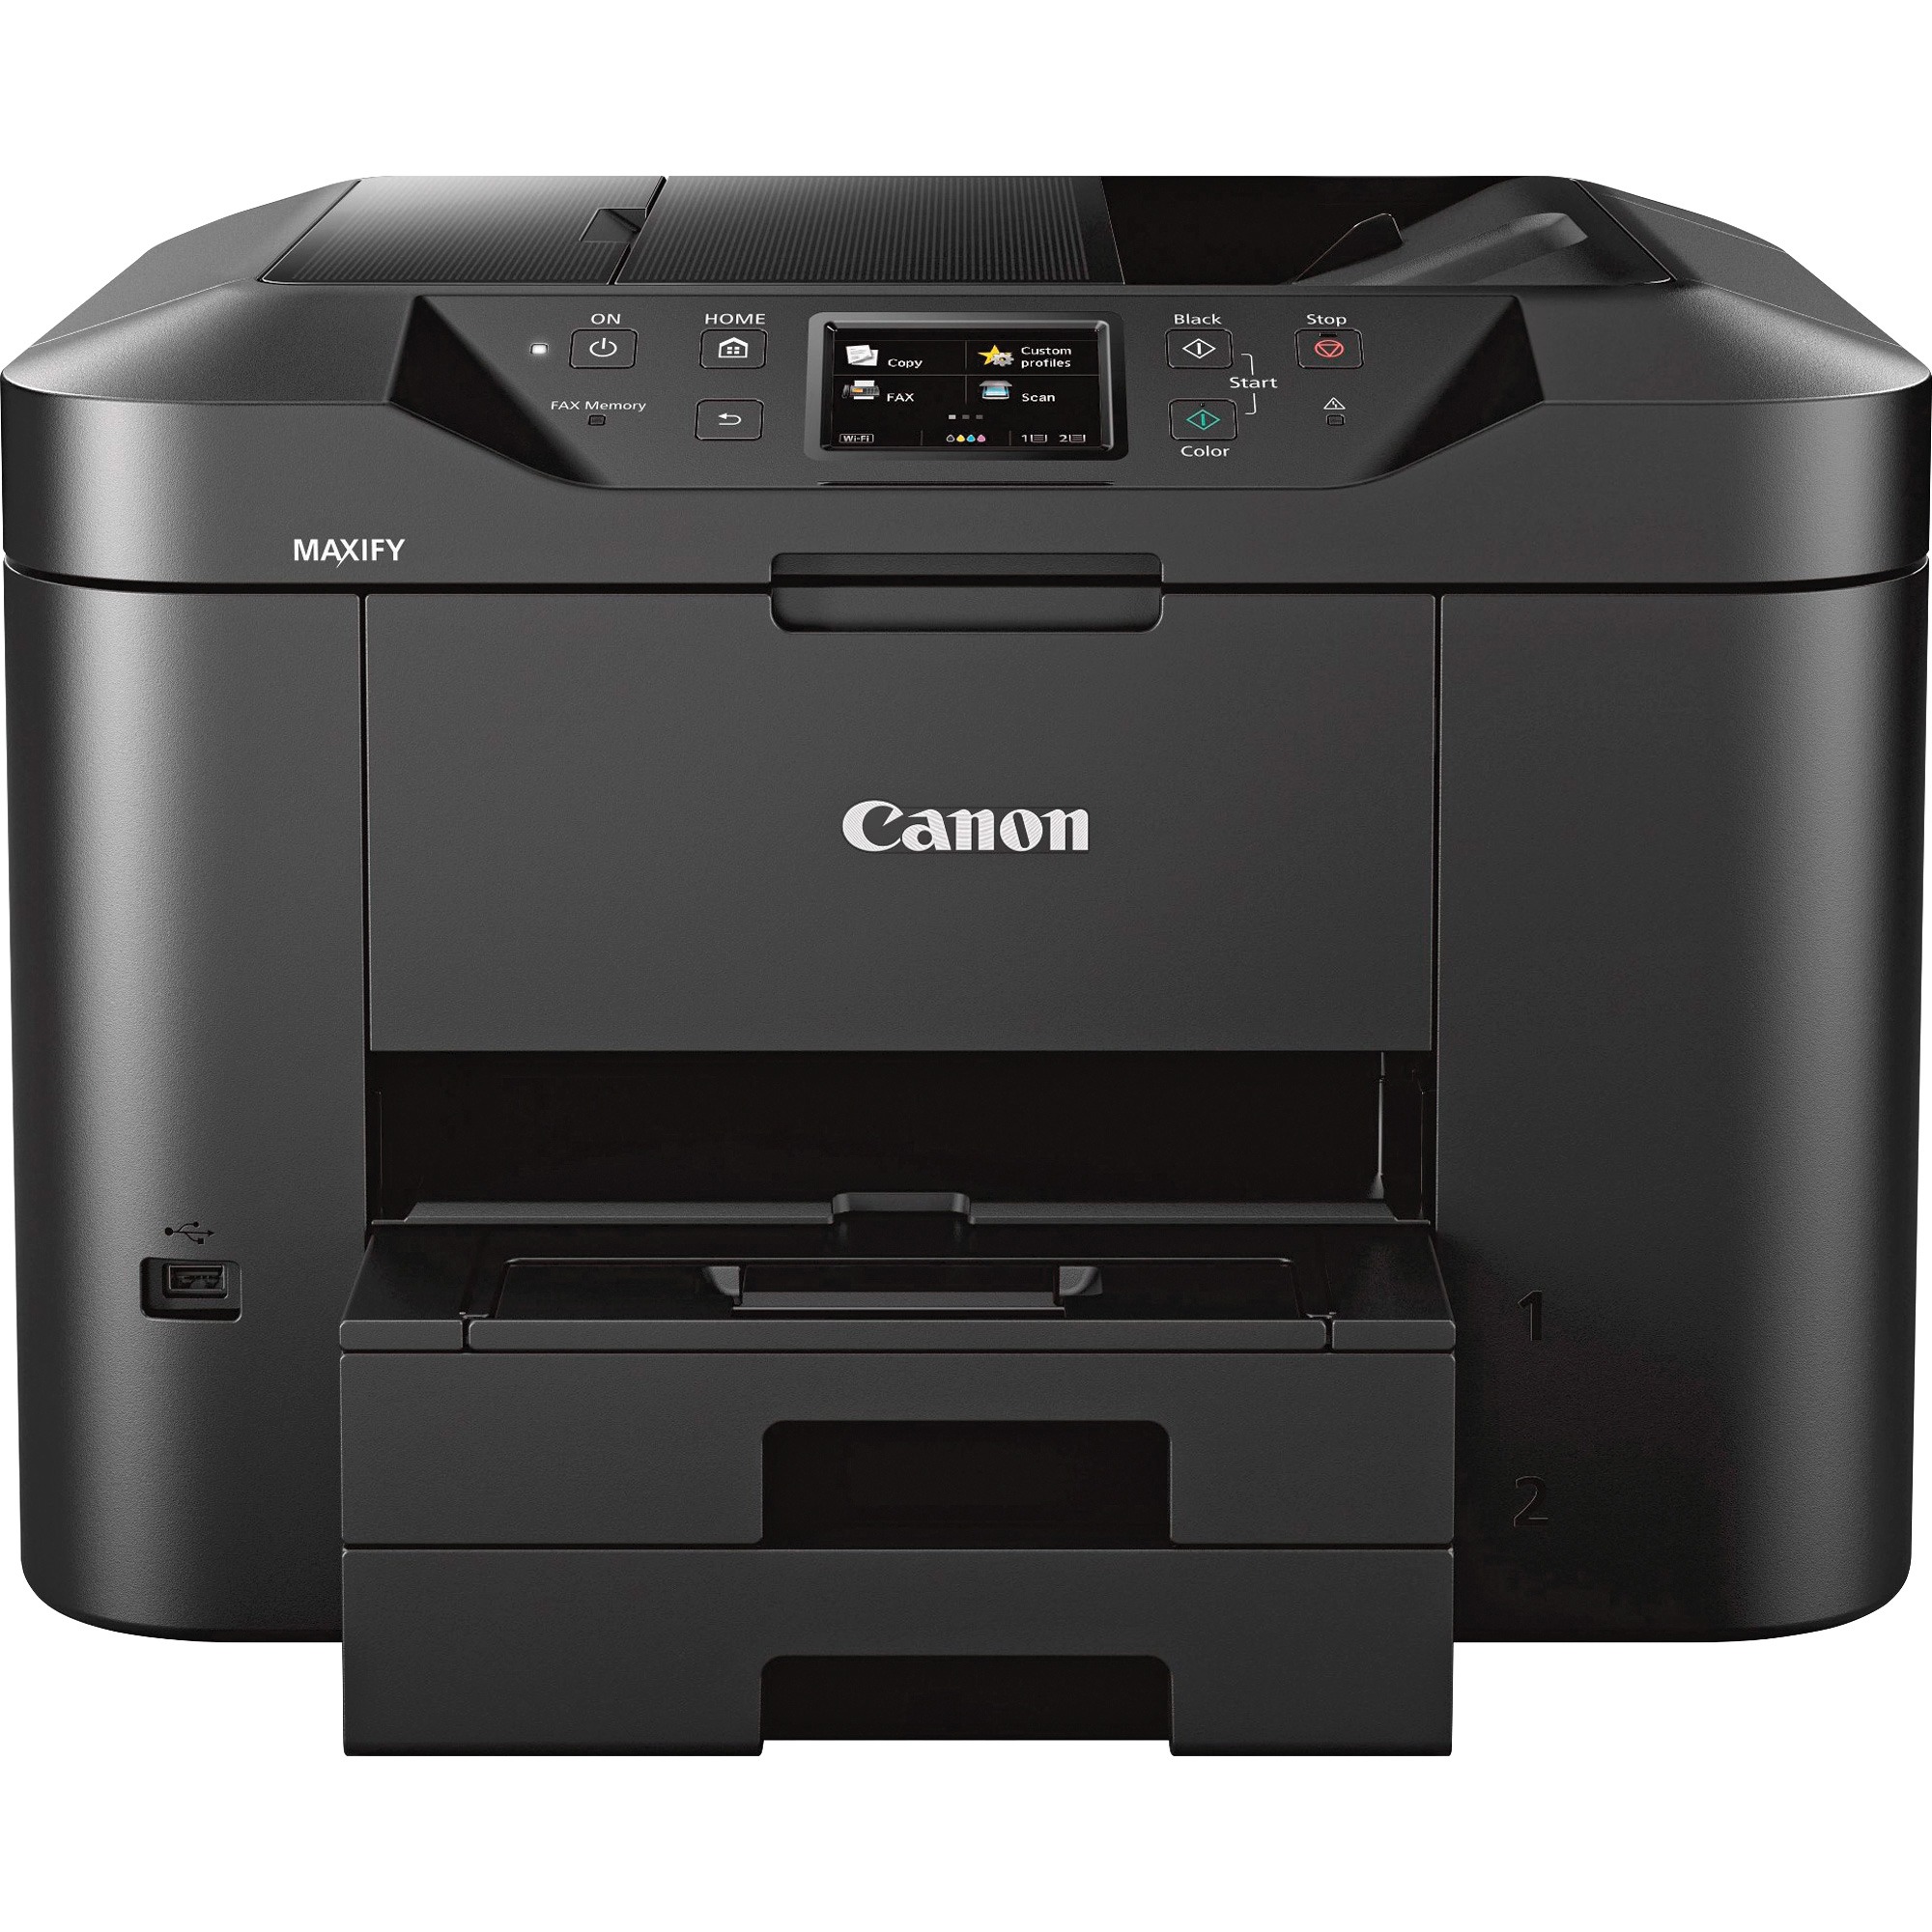 Canon MAXIFY MB2720 Inkjet Multifunction Printer - Color - Plain Paper Print - Desktop - image 1 of 2